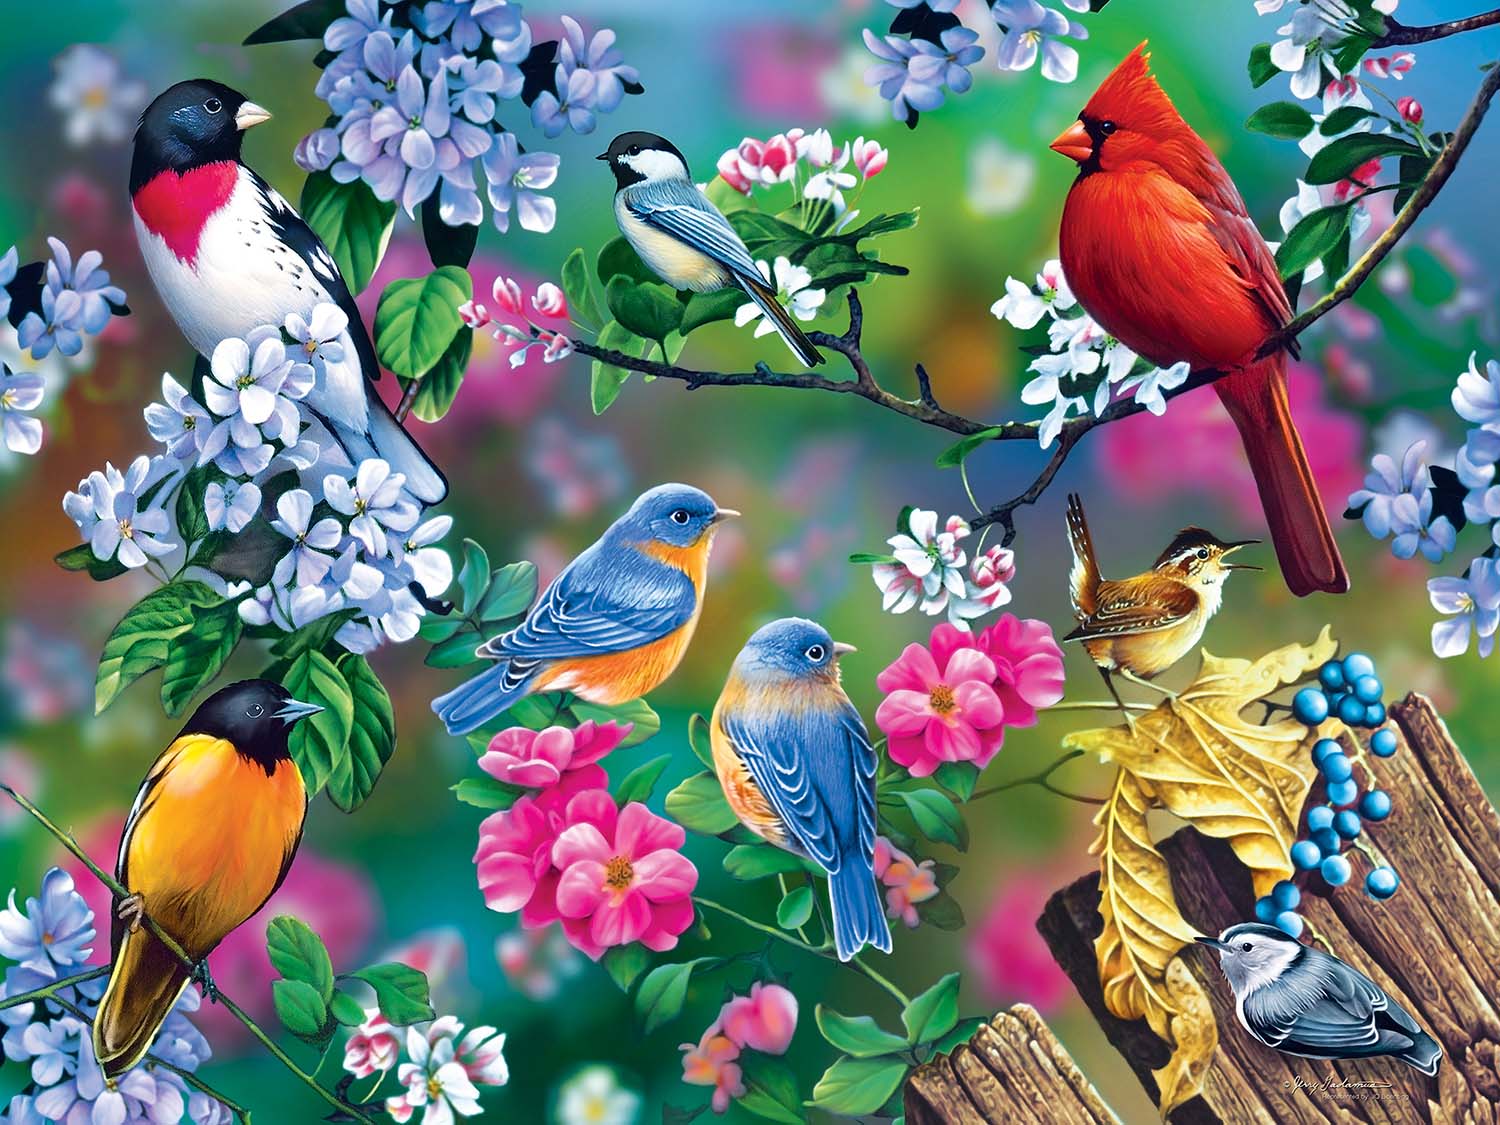 Audubon Songbird Collage Birds Jigsaw Puzzle